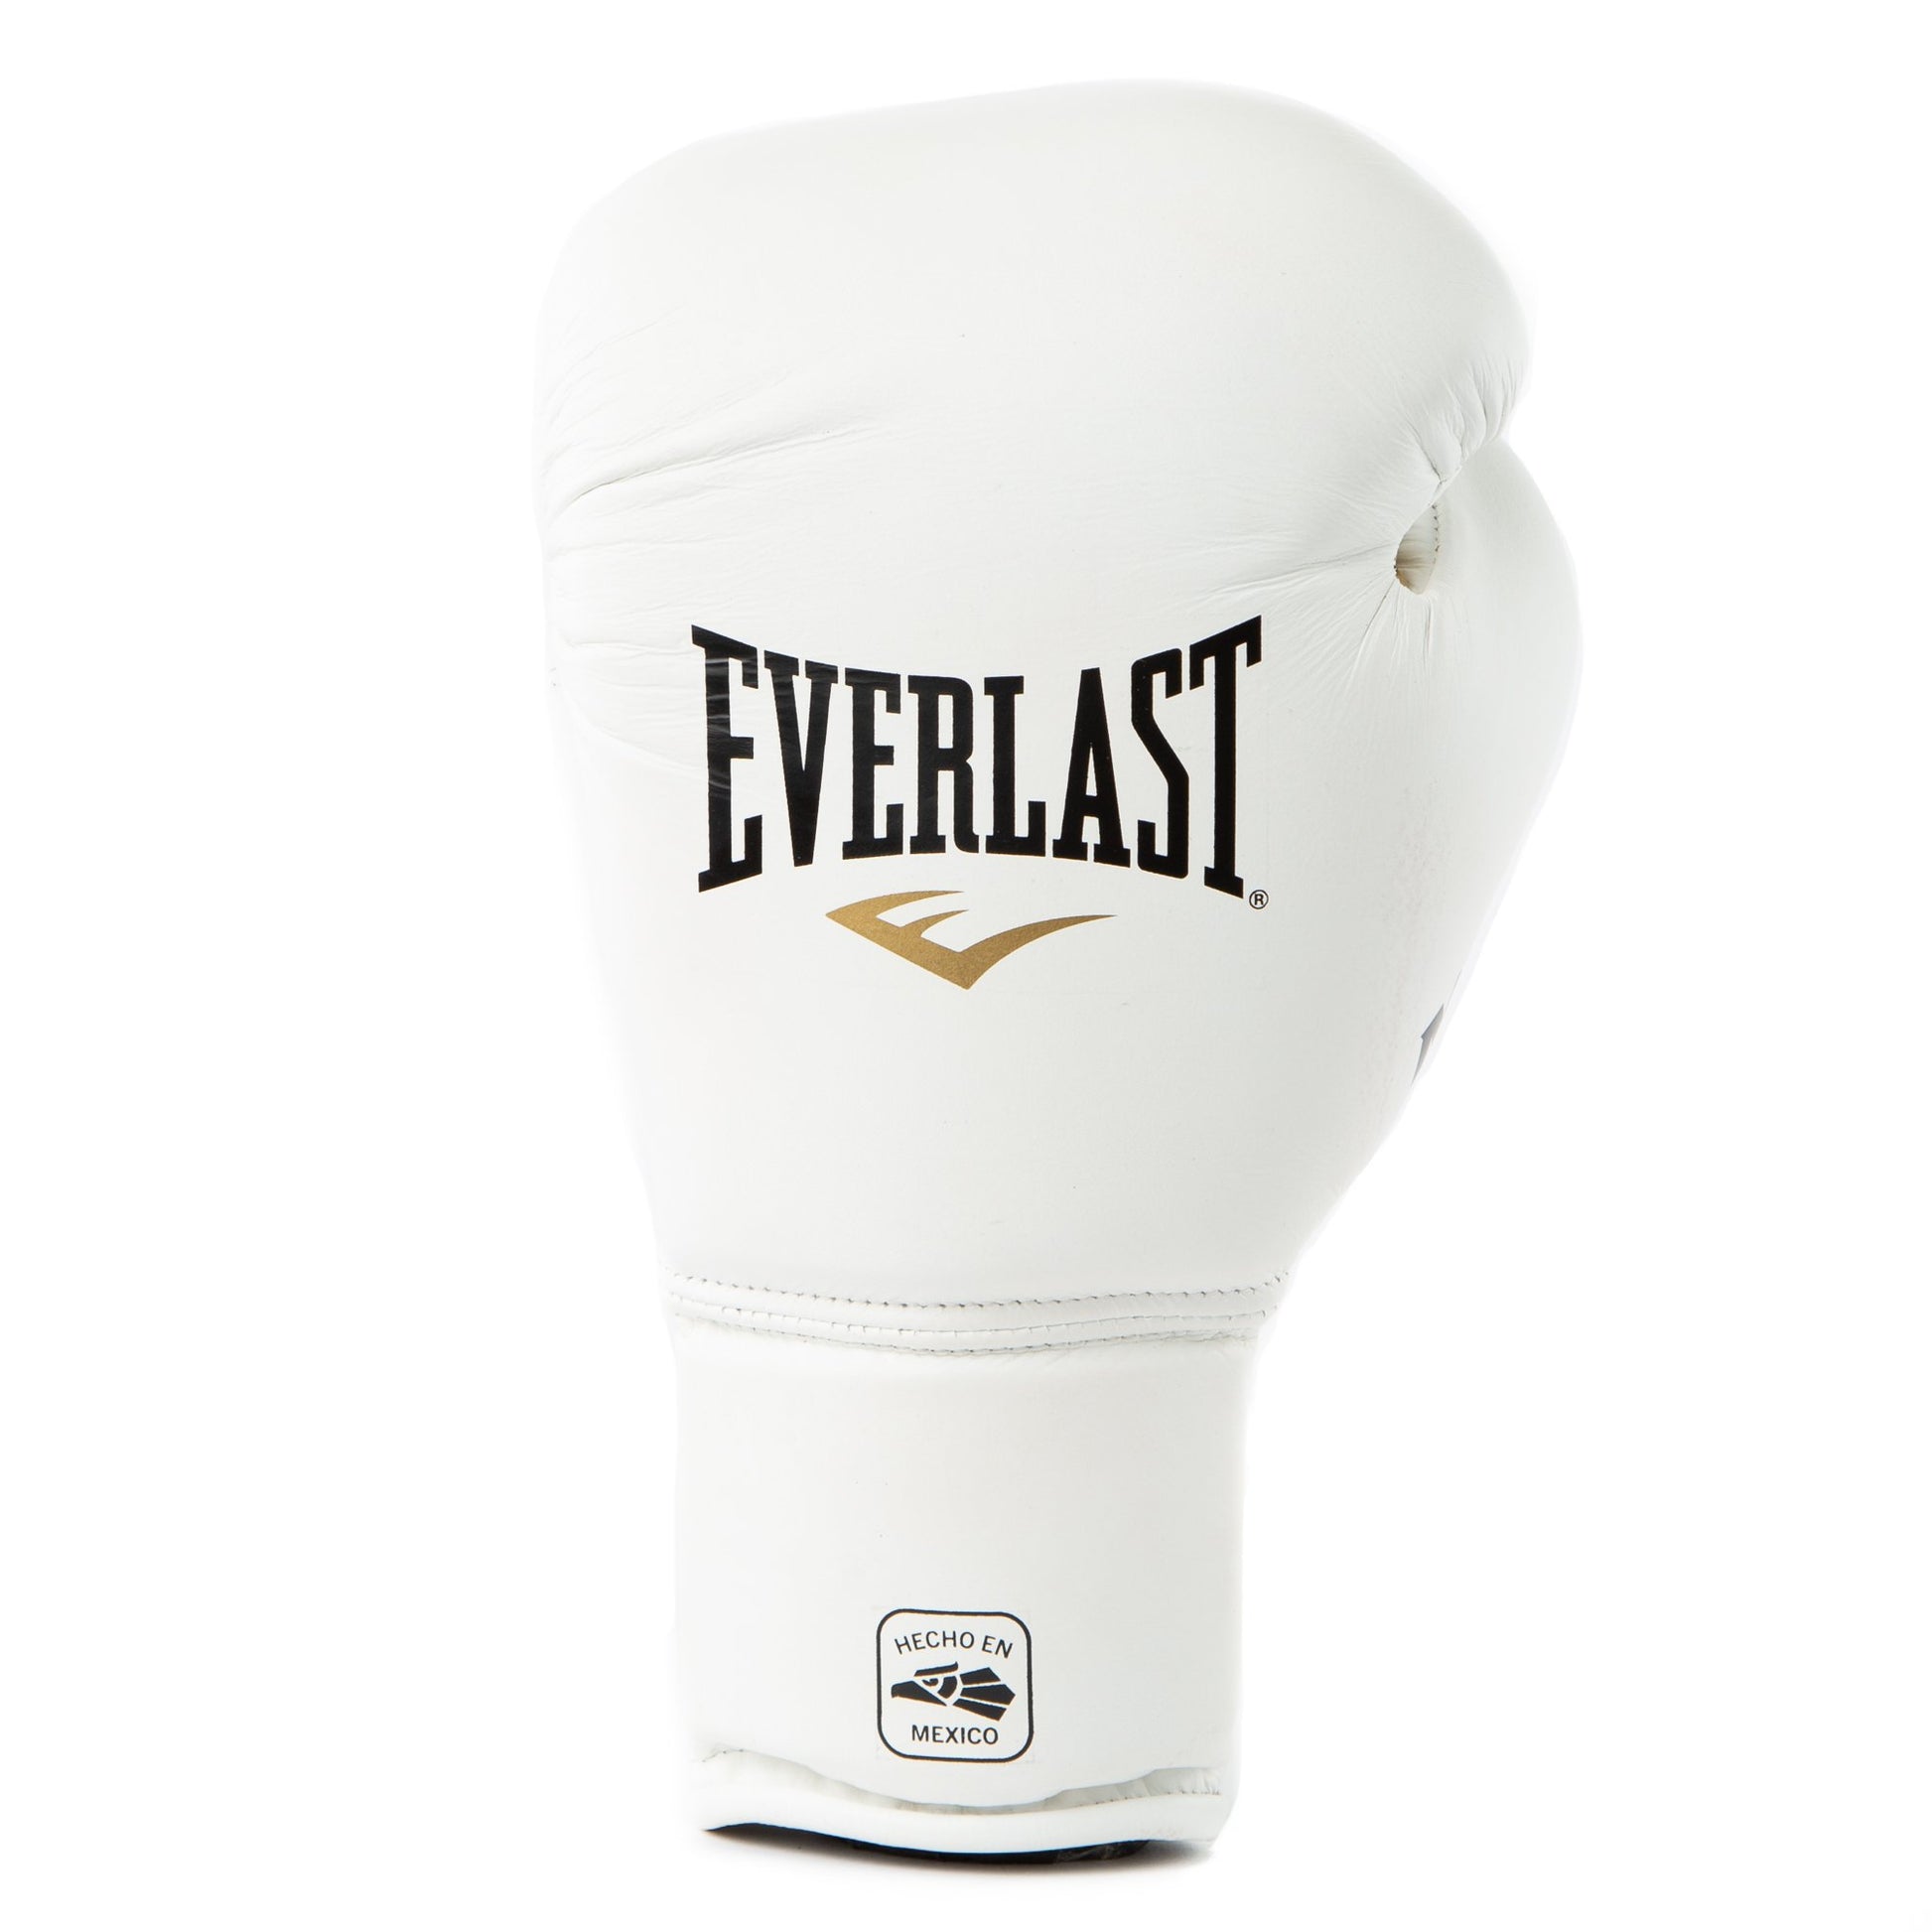 MX2 Laced Training Gloves - Everlast